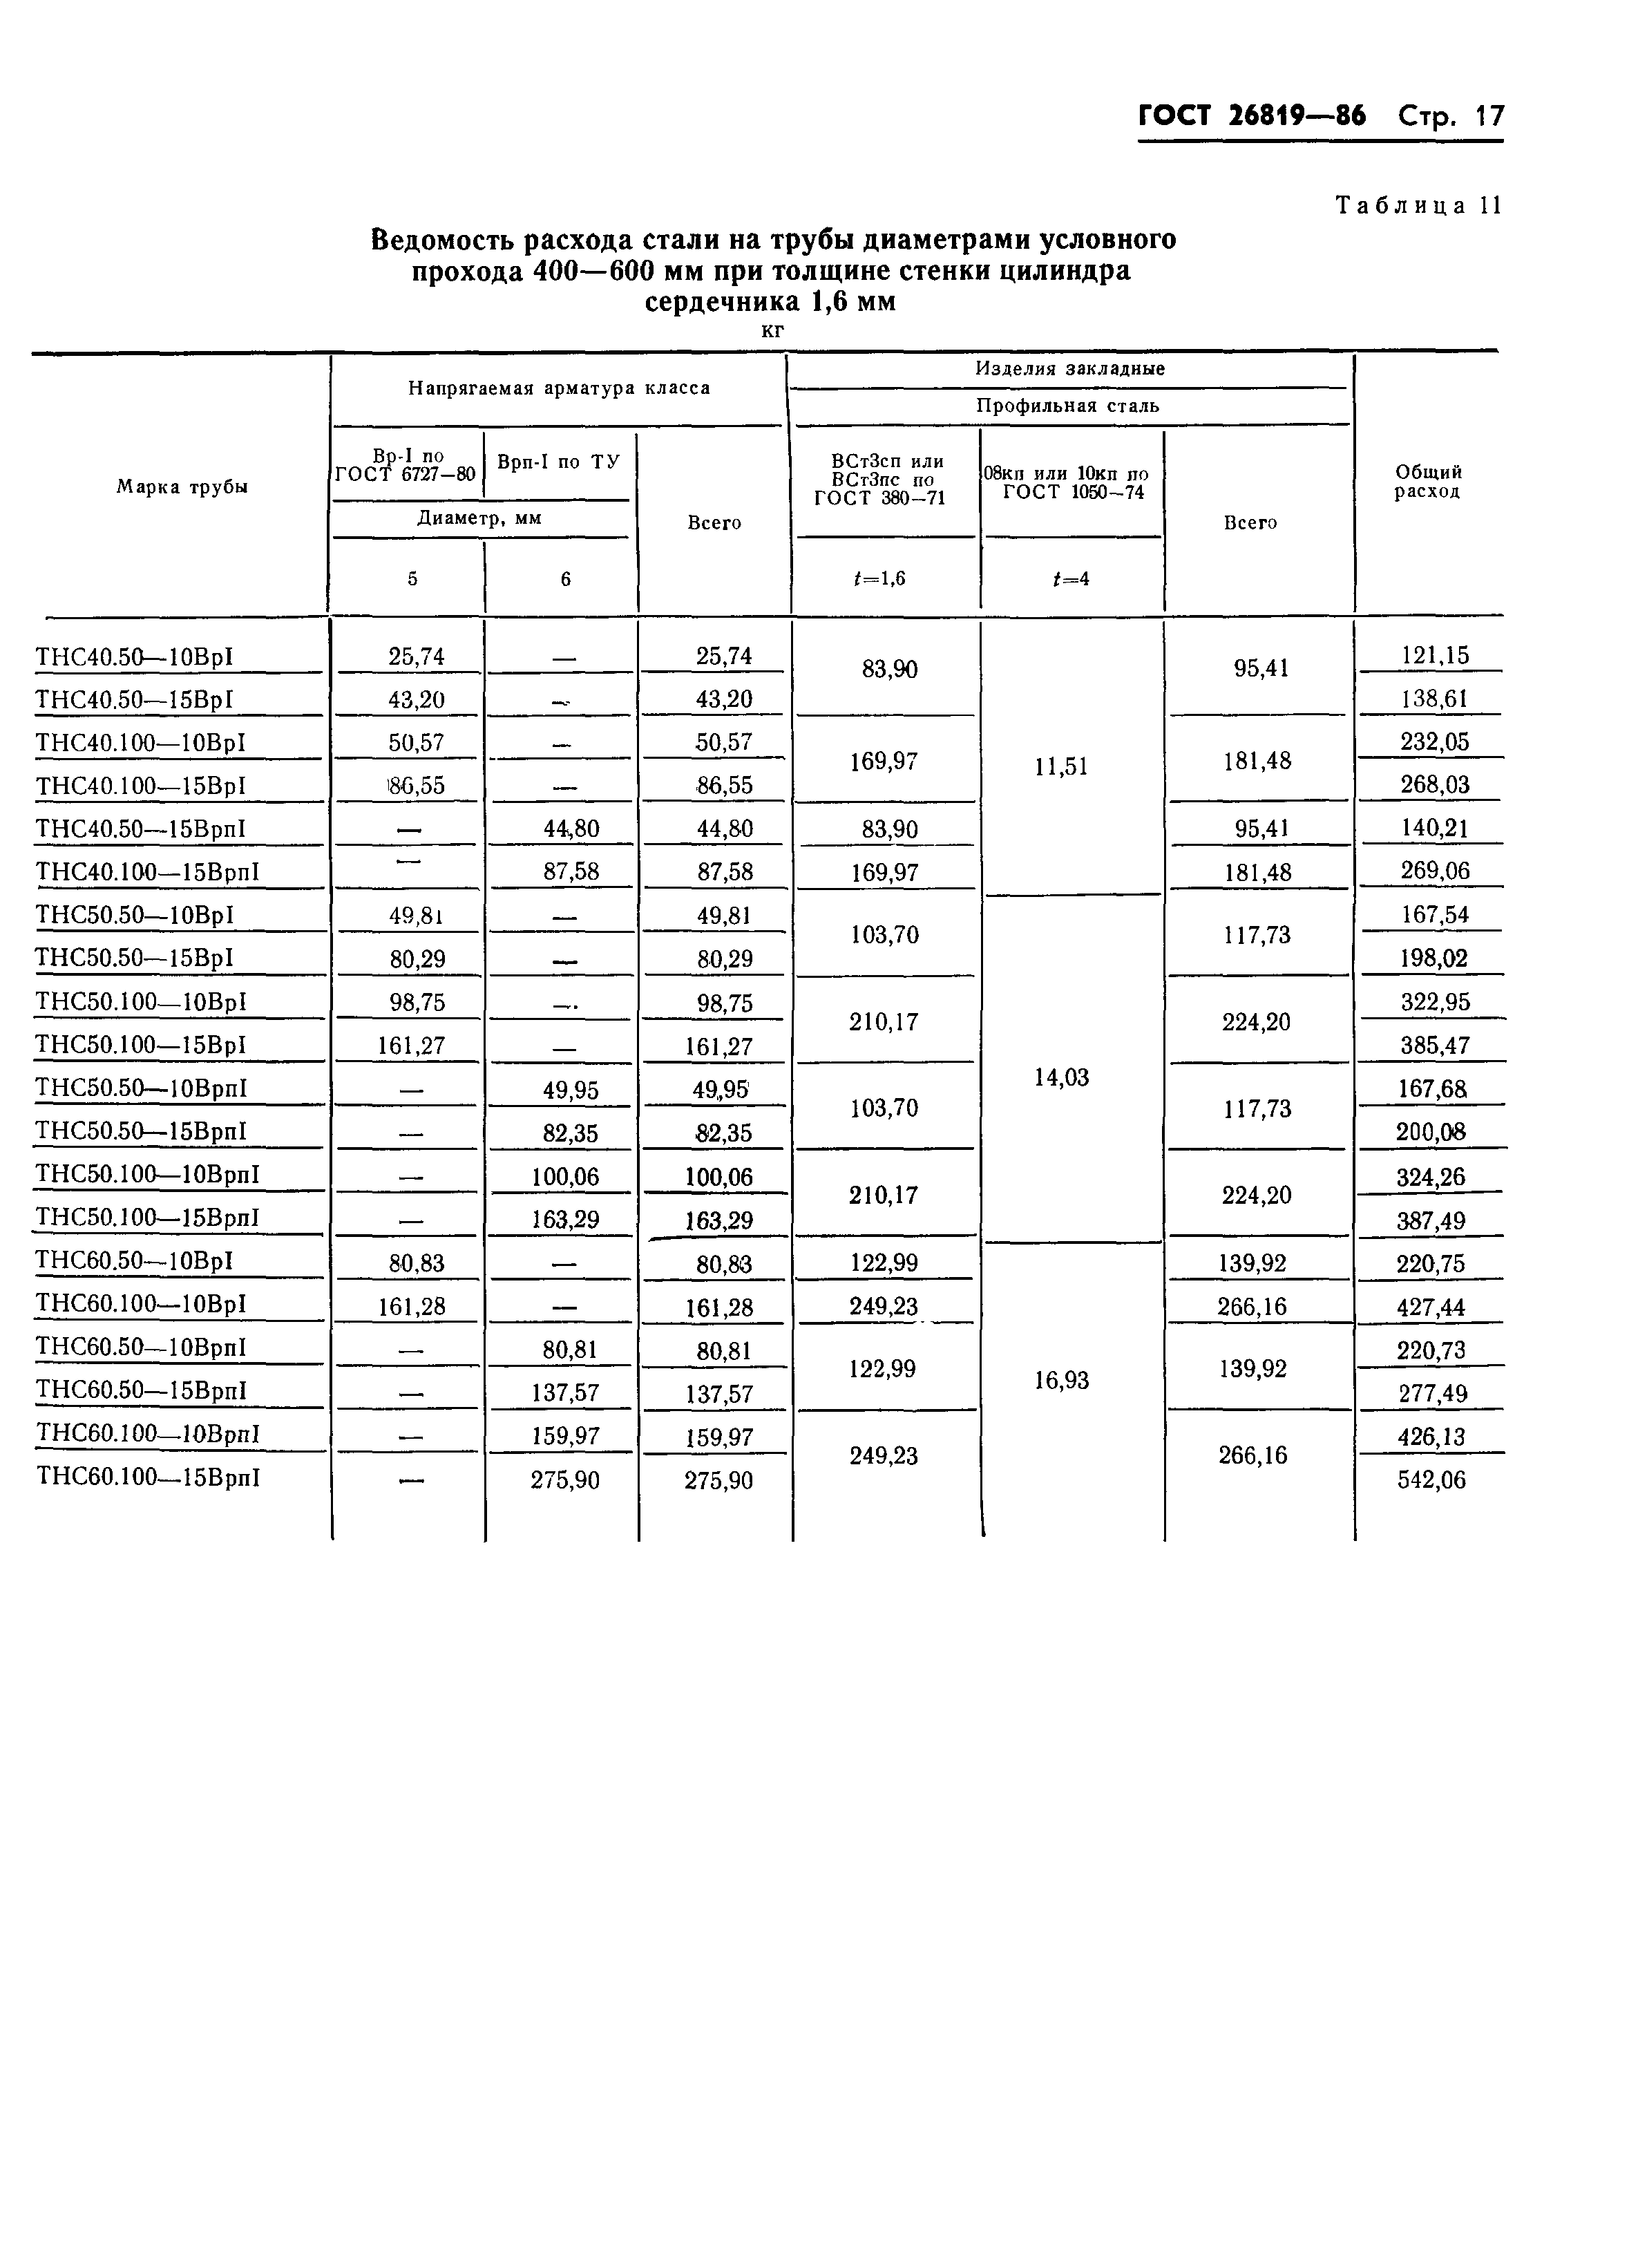 ГОСТ 26819-86